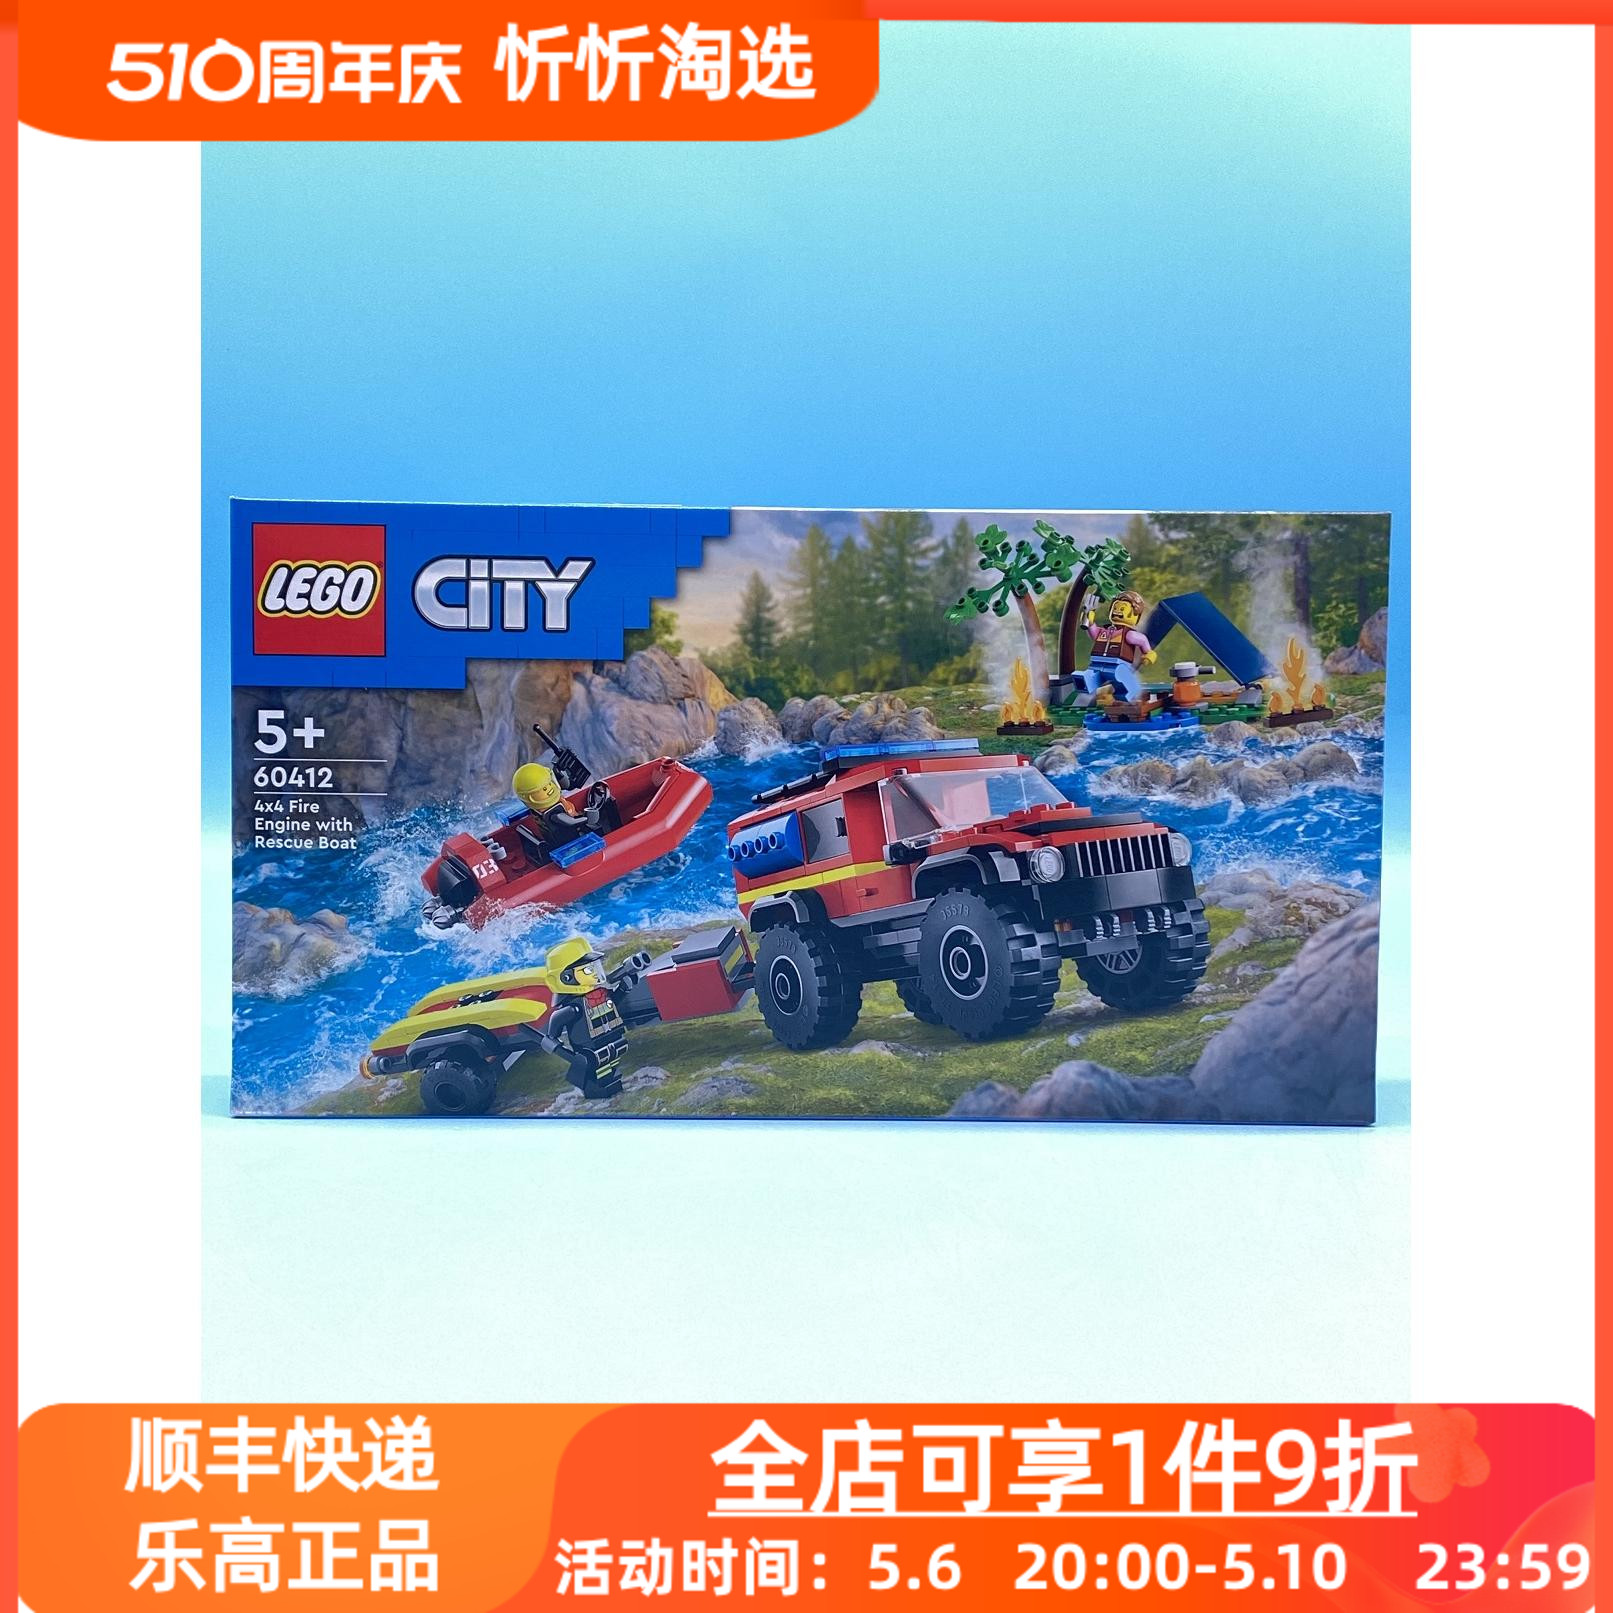 LEGO乐高城市系列60412 4x4 消防车和救生艇男生益智积木玩具新品